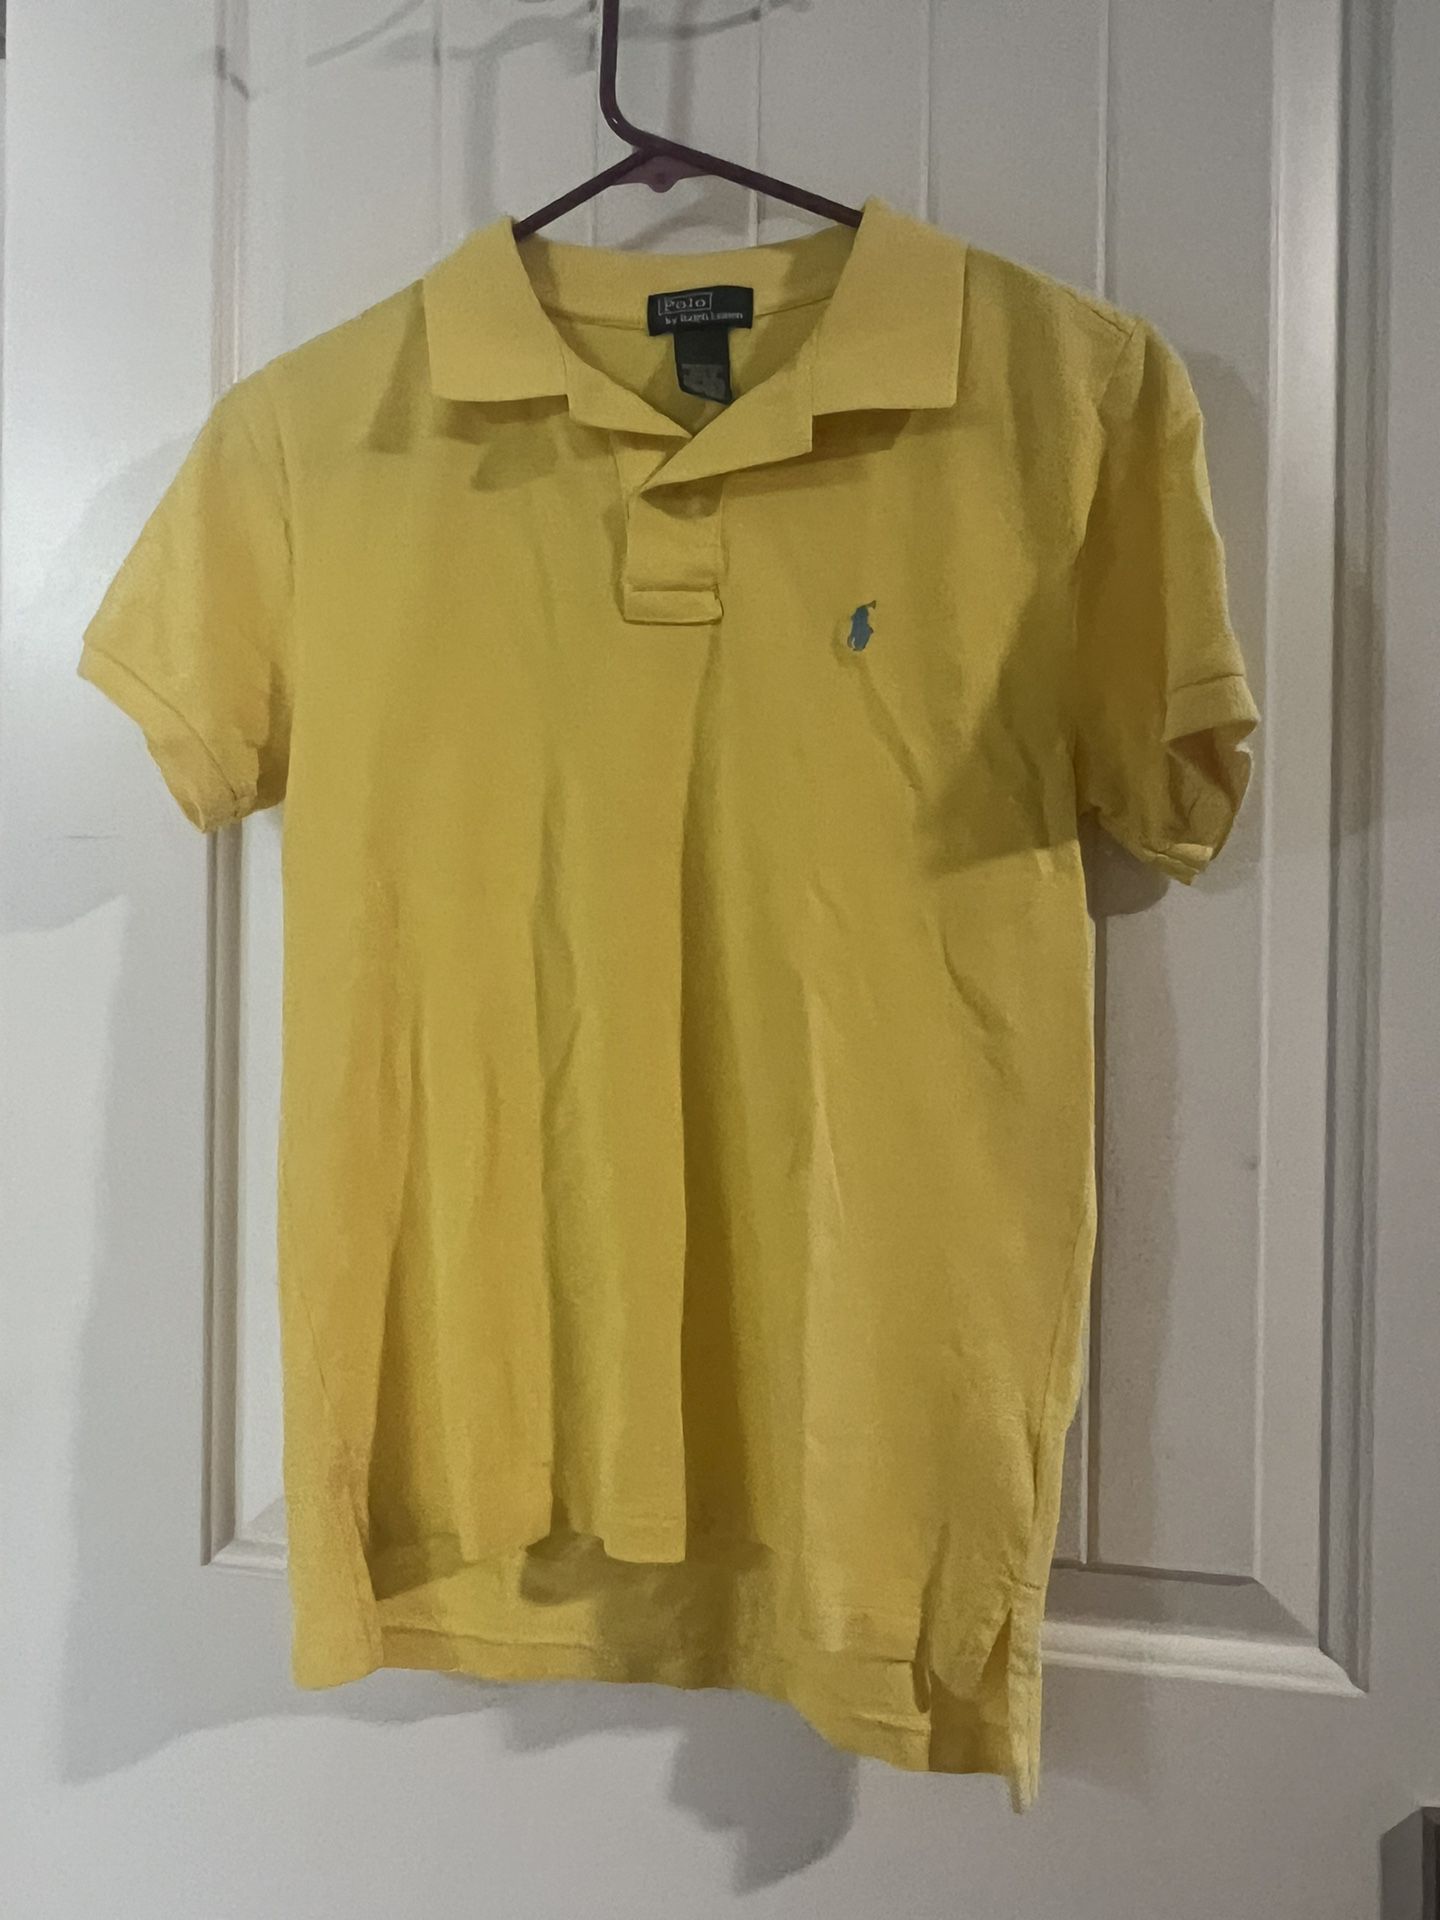 Boys Polo Ralph Lauren Shirt Size Medium Yellow